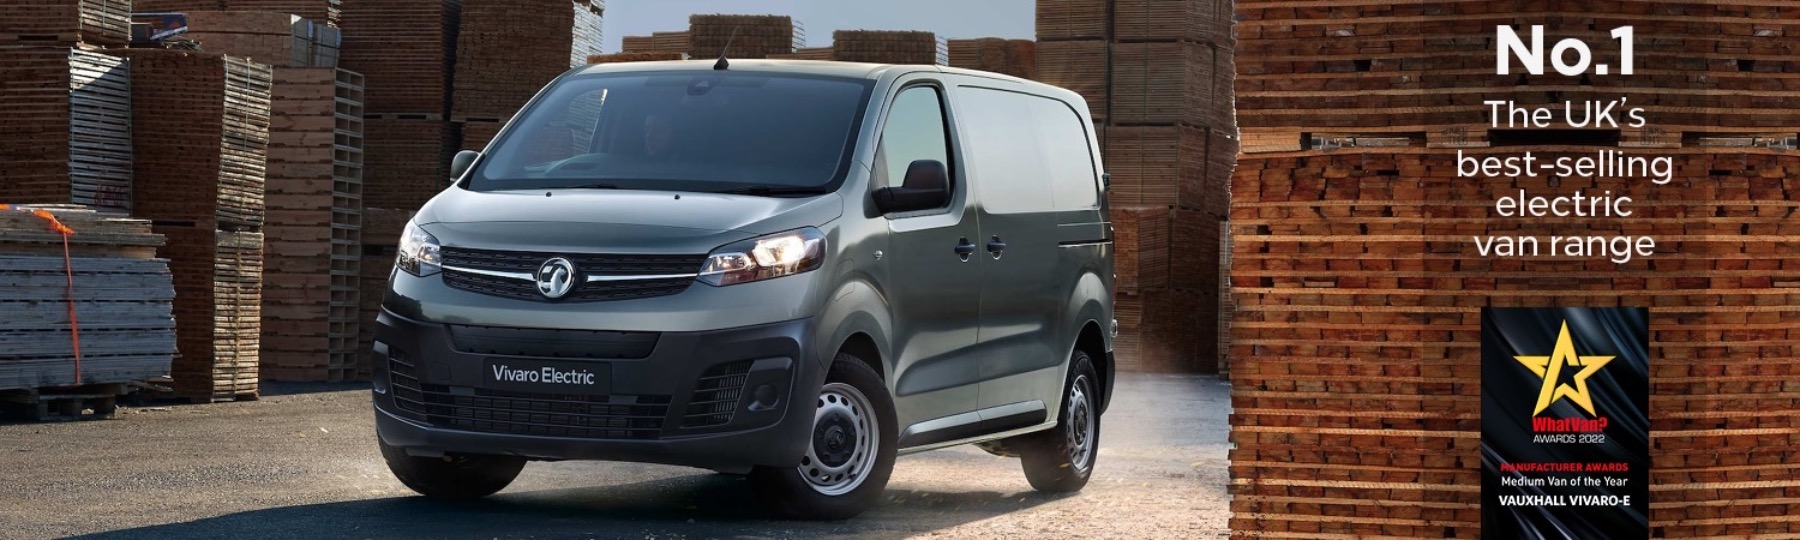 Vauxhall Vivaro Electric New Van Offer